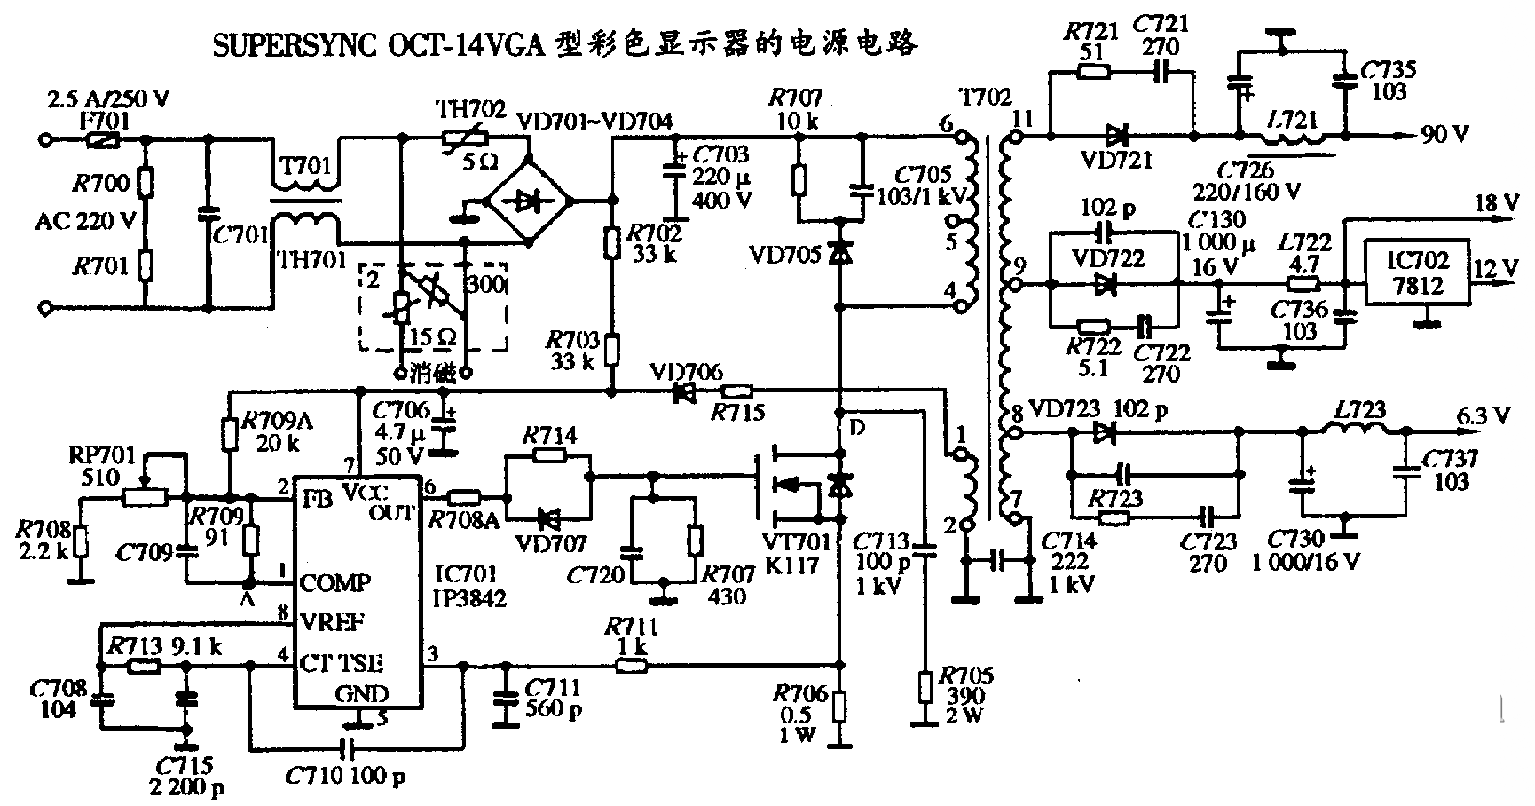 SUPERSYNC OCT-14VGA型彩色显示器的电源电路图